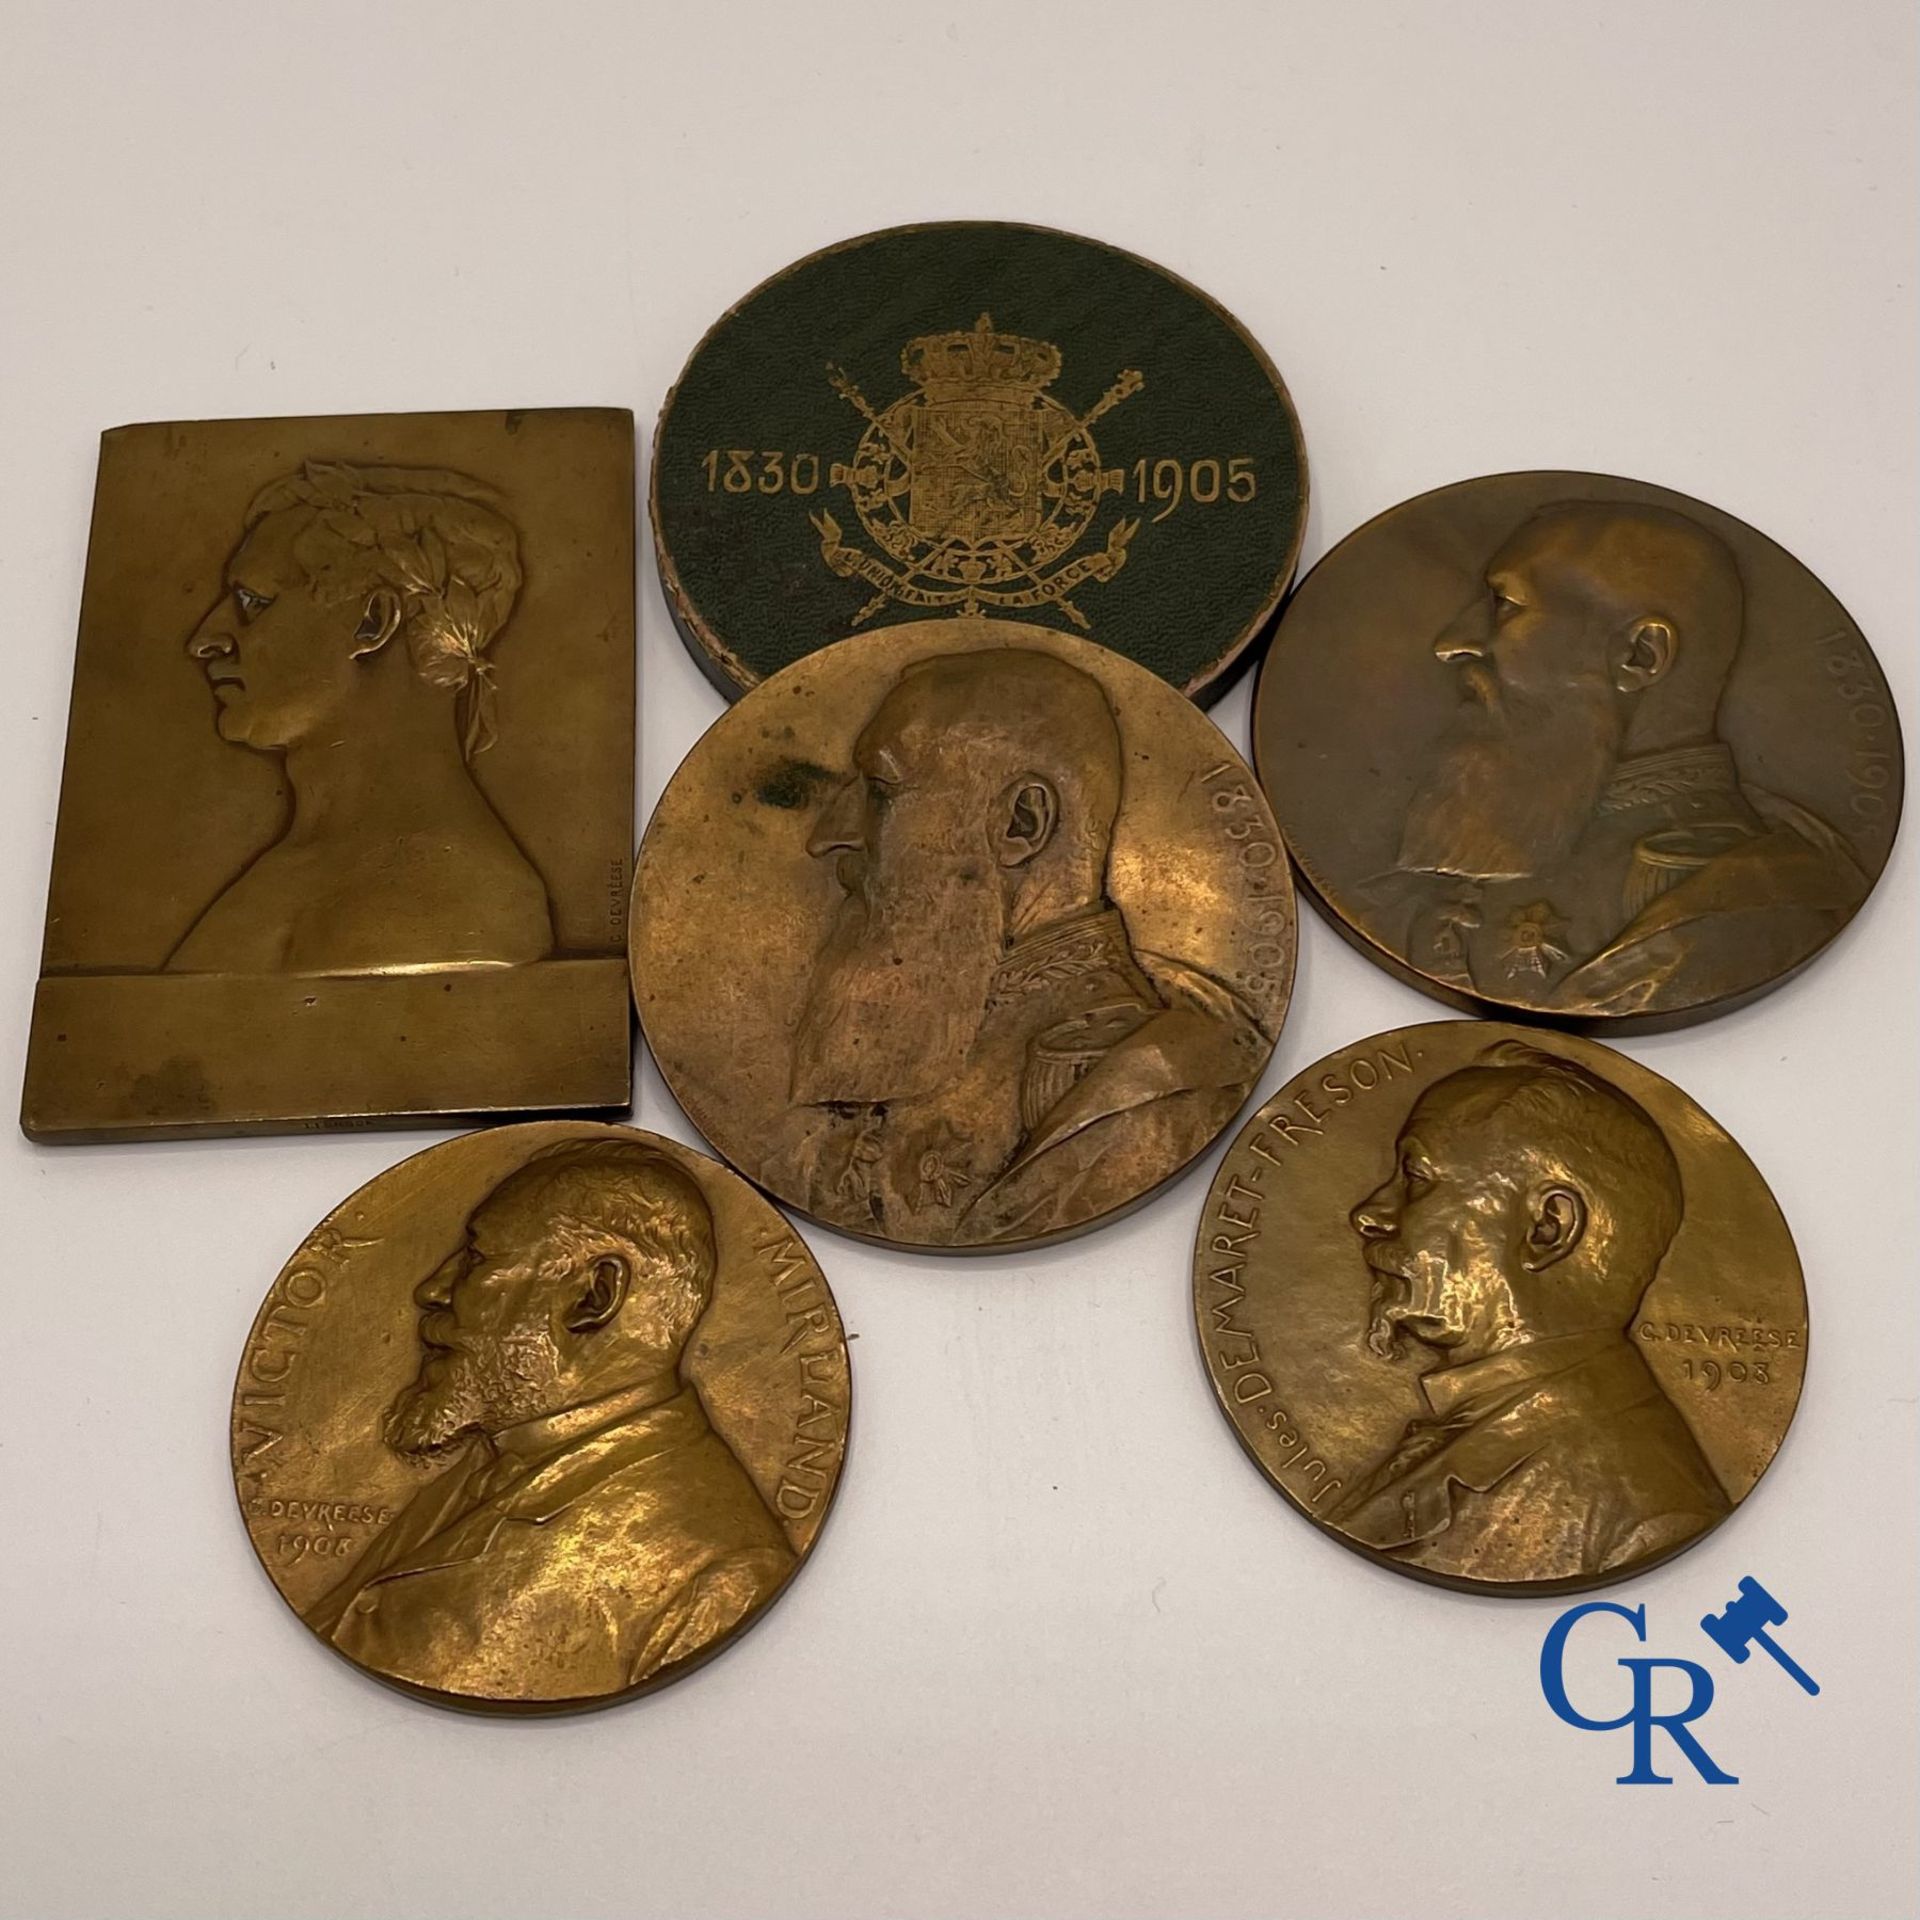 Medals: Godefroid Devreese: 5 medals in bronze. - Image 2 of 2